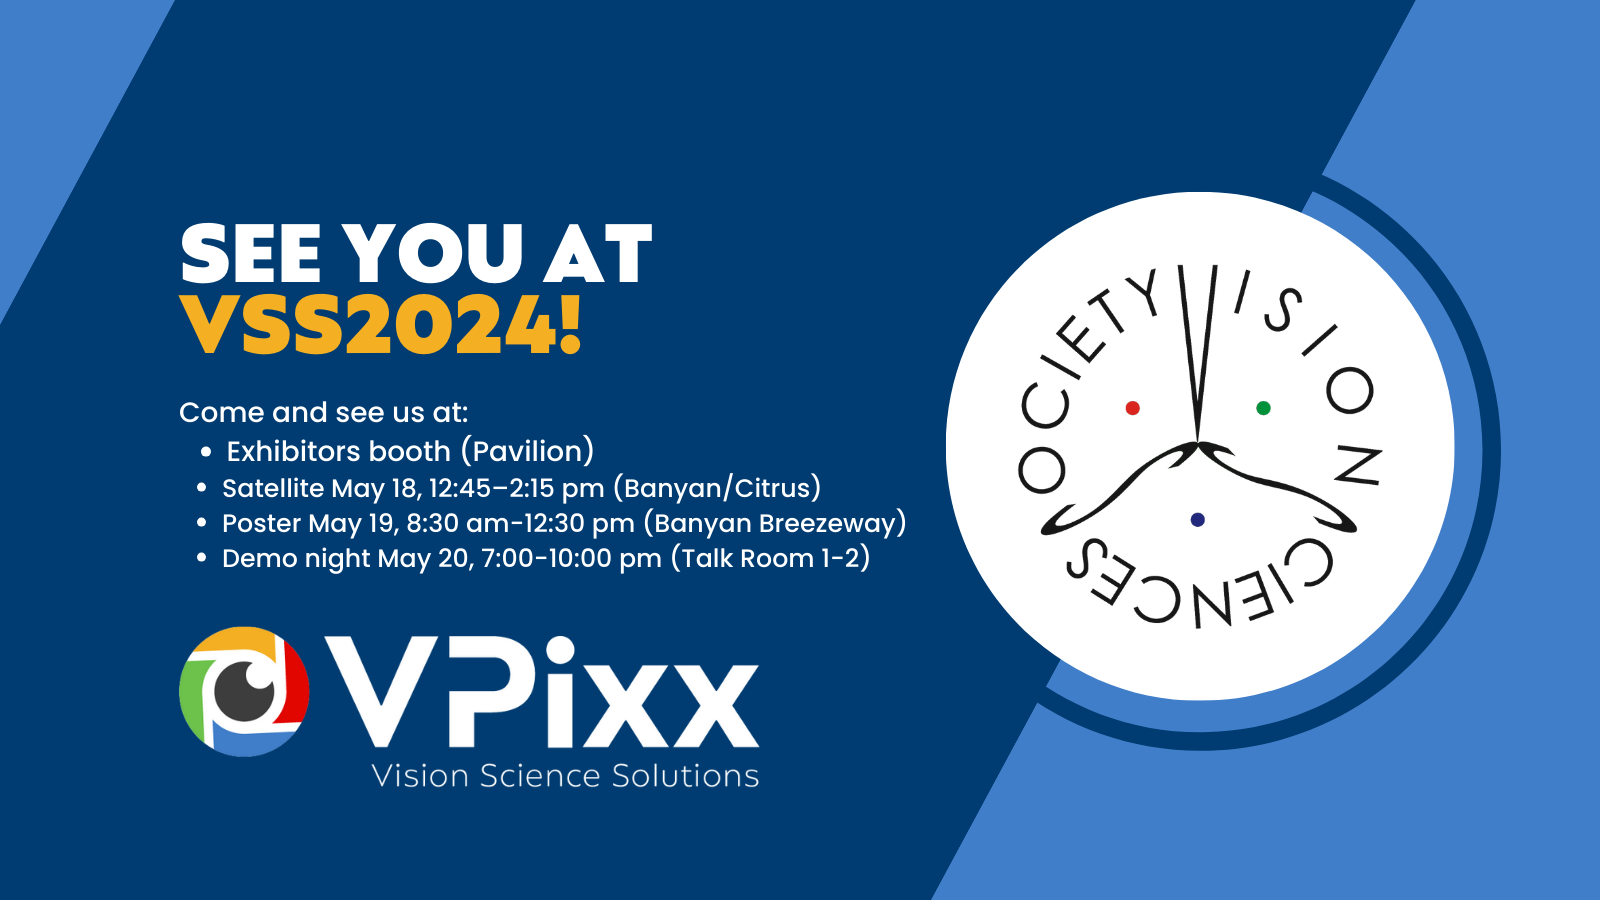 VPixx Technologies will be at VSS2024!